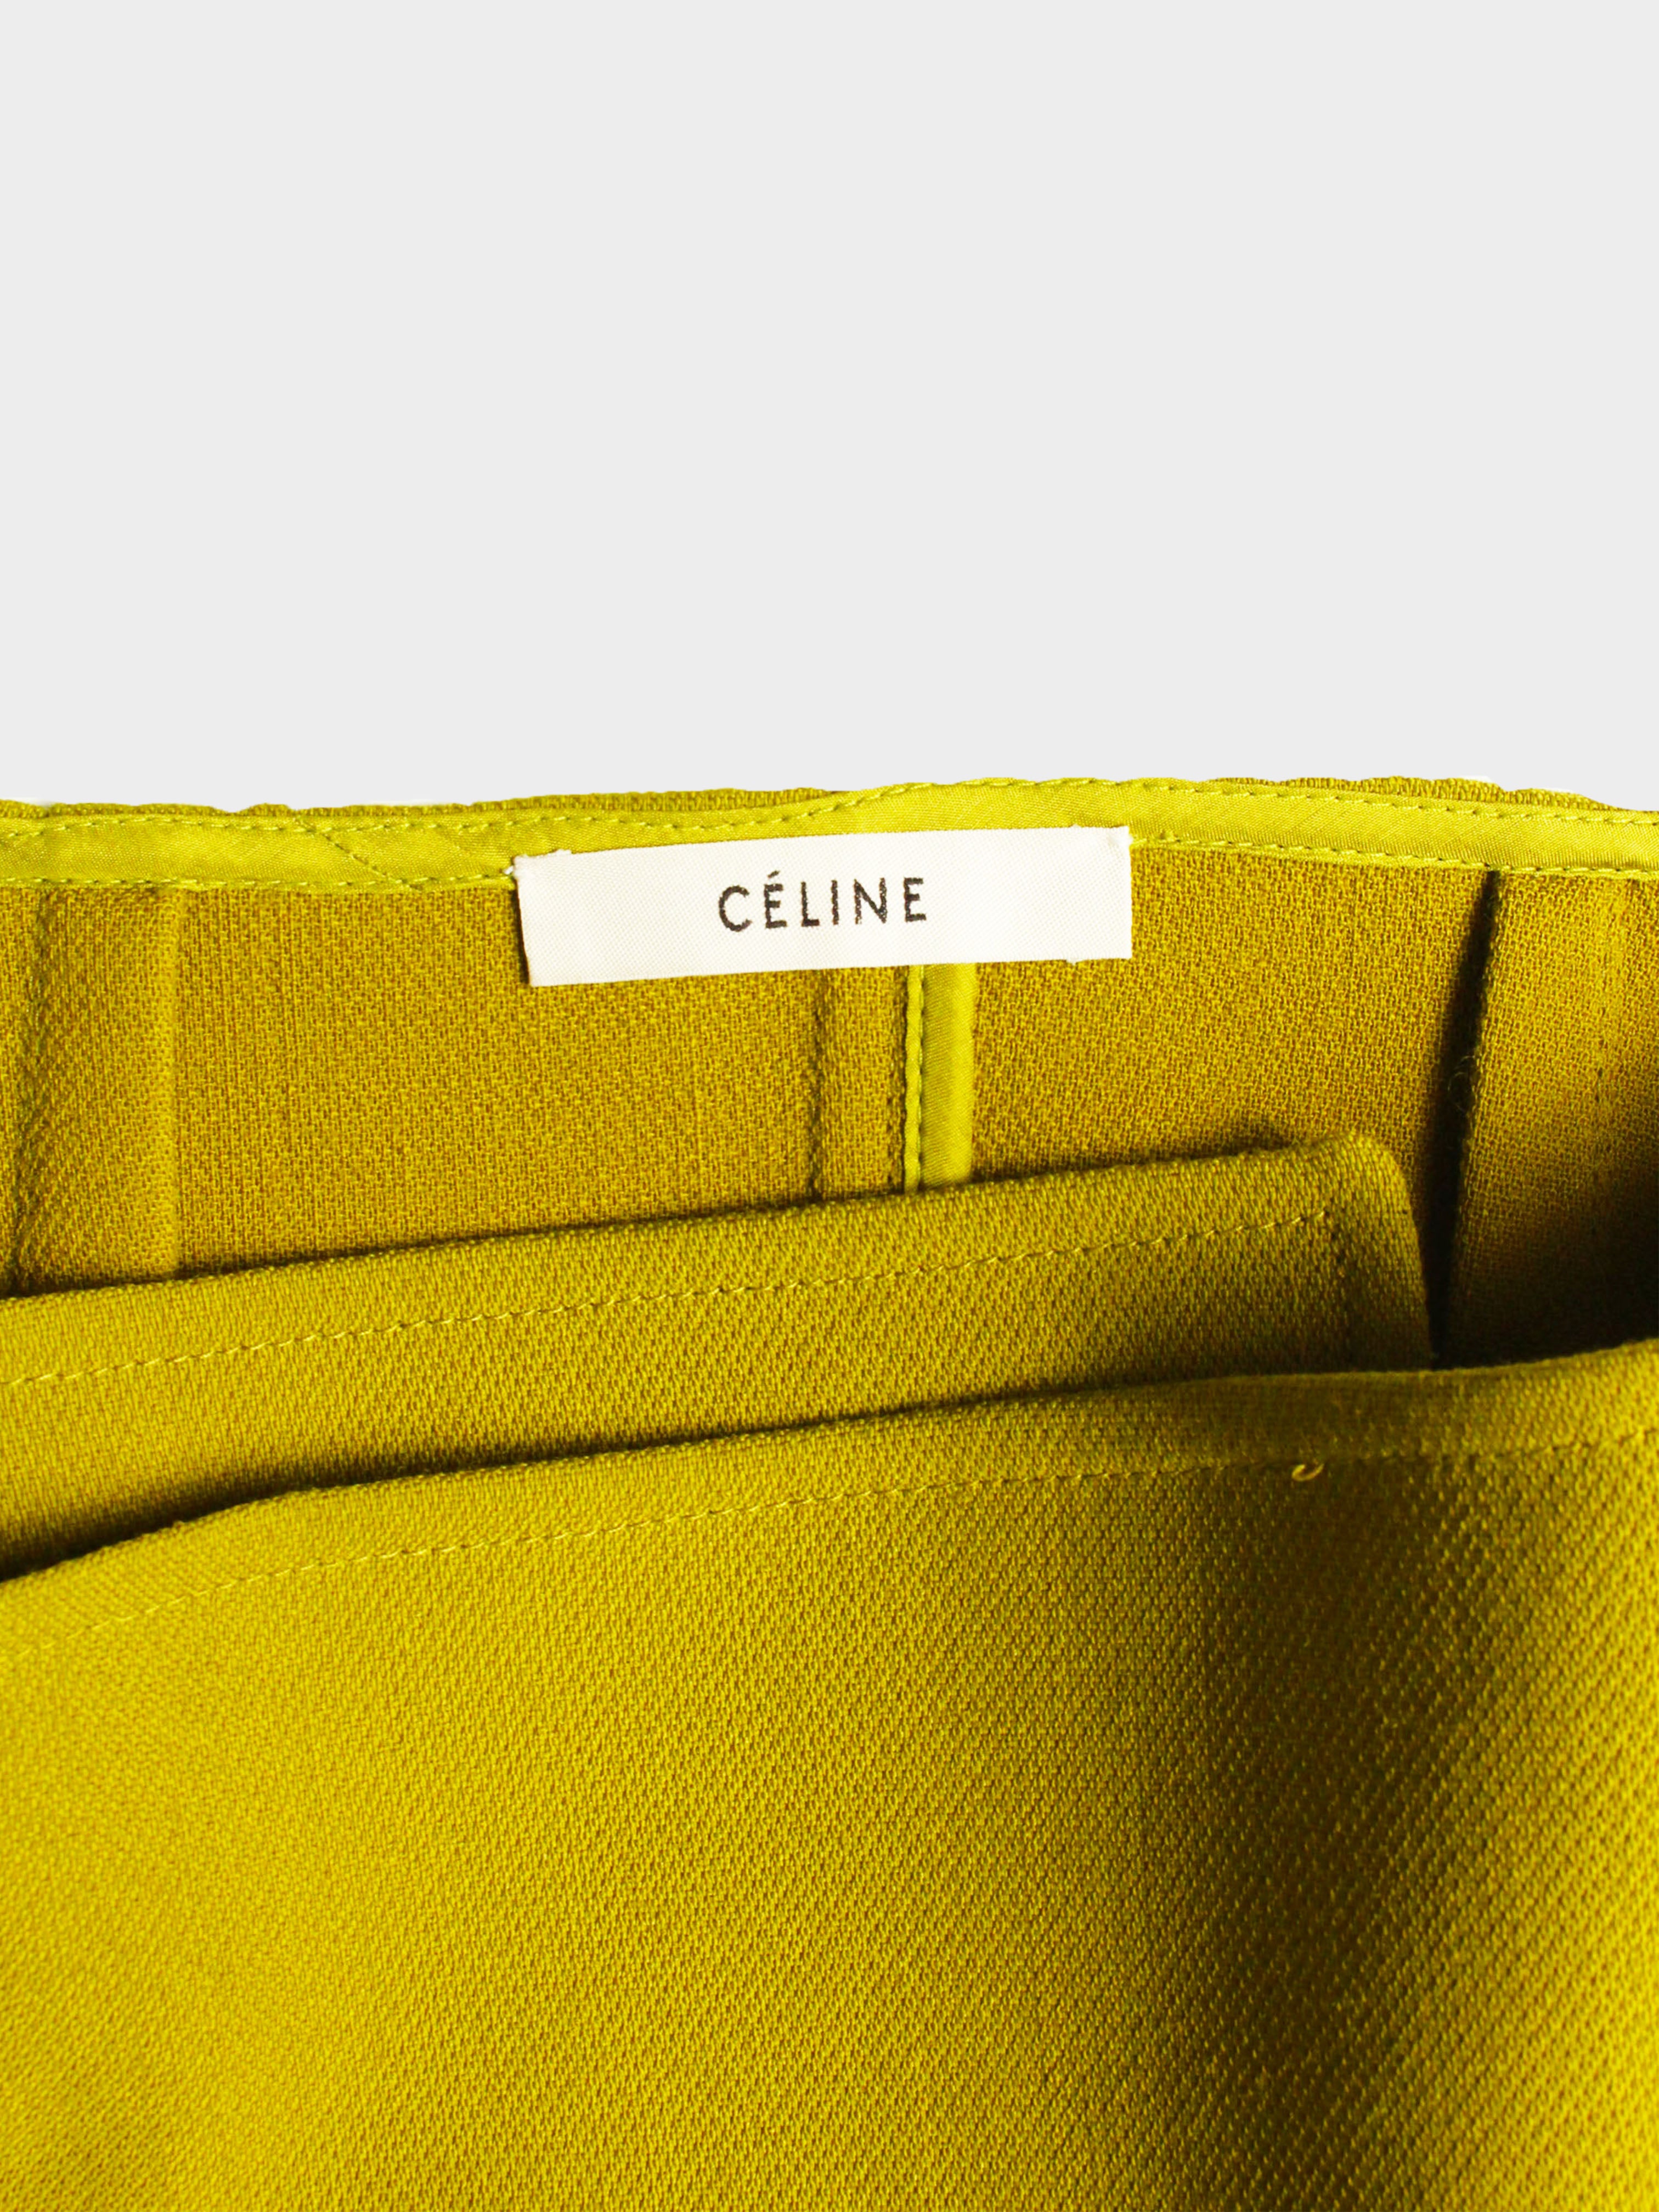 Céline by Phoebe Philo 2010s Green Wool Wrap Skirt